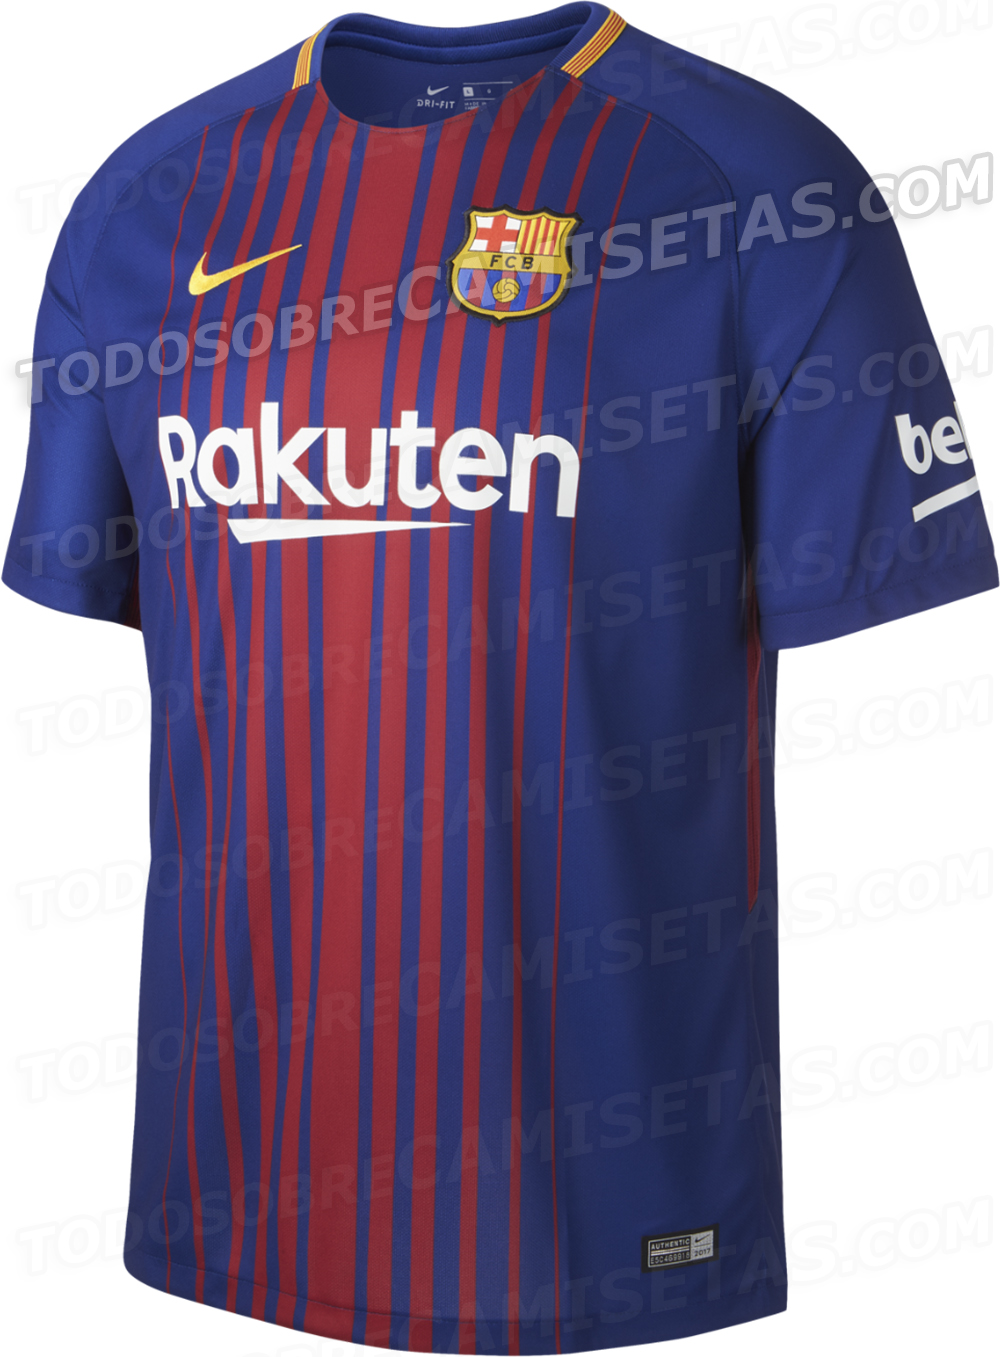 Camiseta Nike de FC Barcelona 2017-18